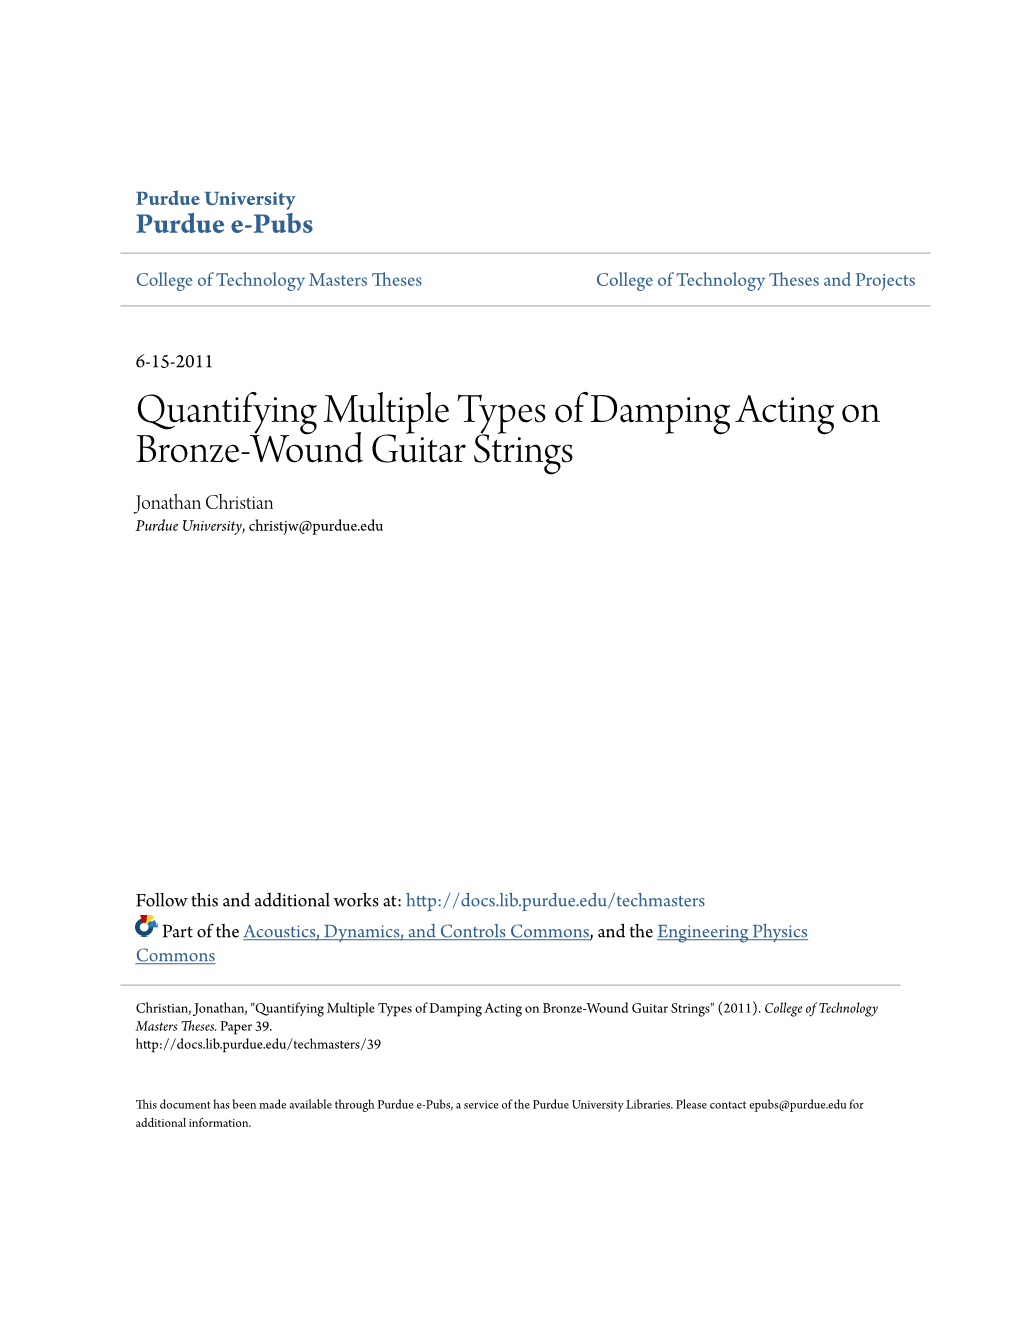 Quantifying Multiple Types of Damping Acting on Bronze-Wound Guitar Strings Jonathan Christian Purdue University, Christjw@Purdue.Edu